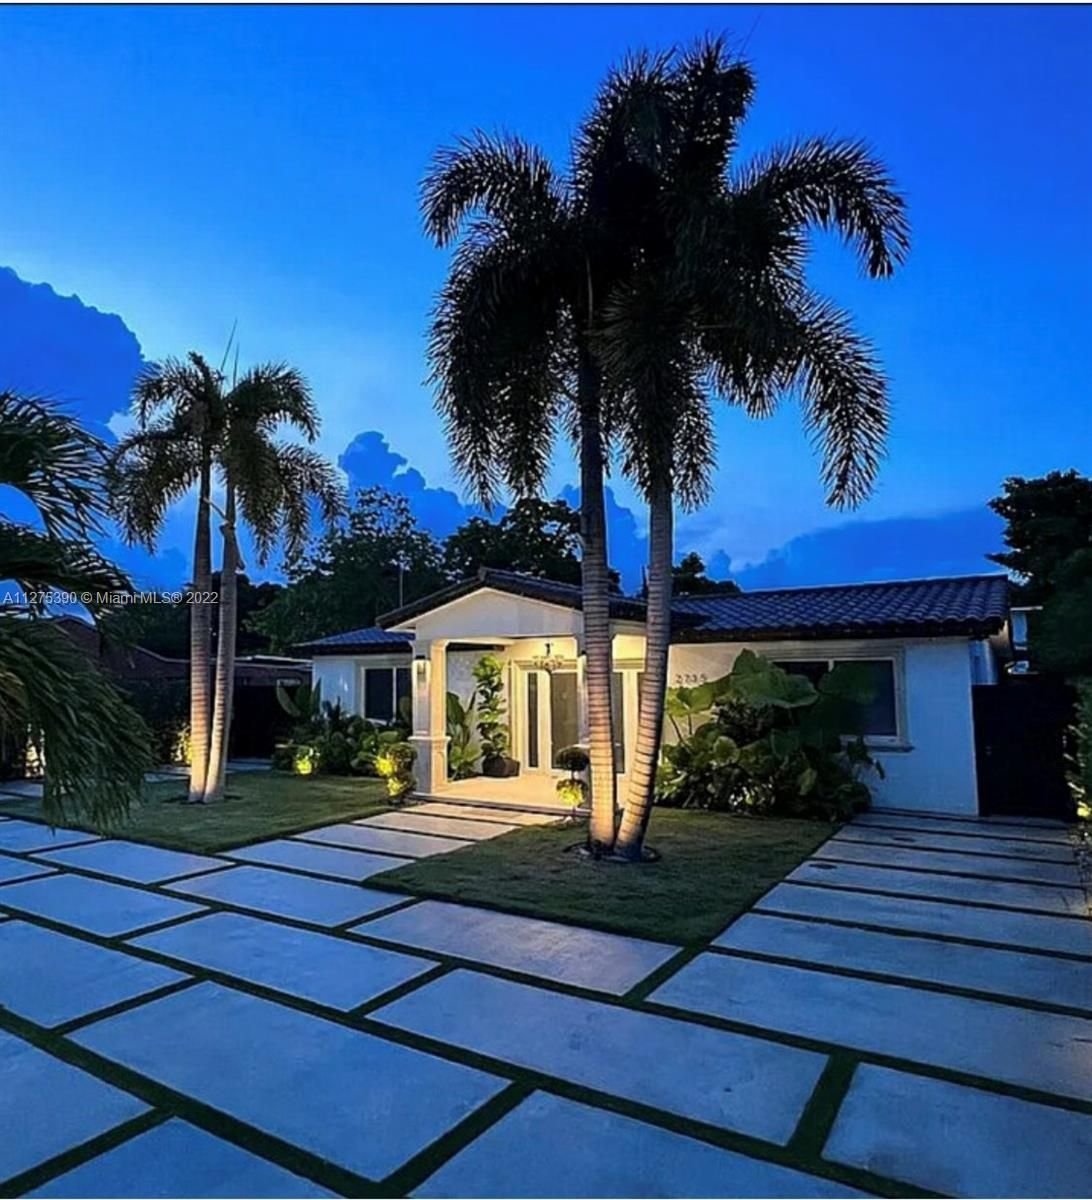 Real estate property located at 2735 99th St, Miami-Dade County, Miami, FL